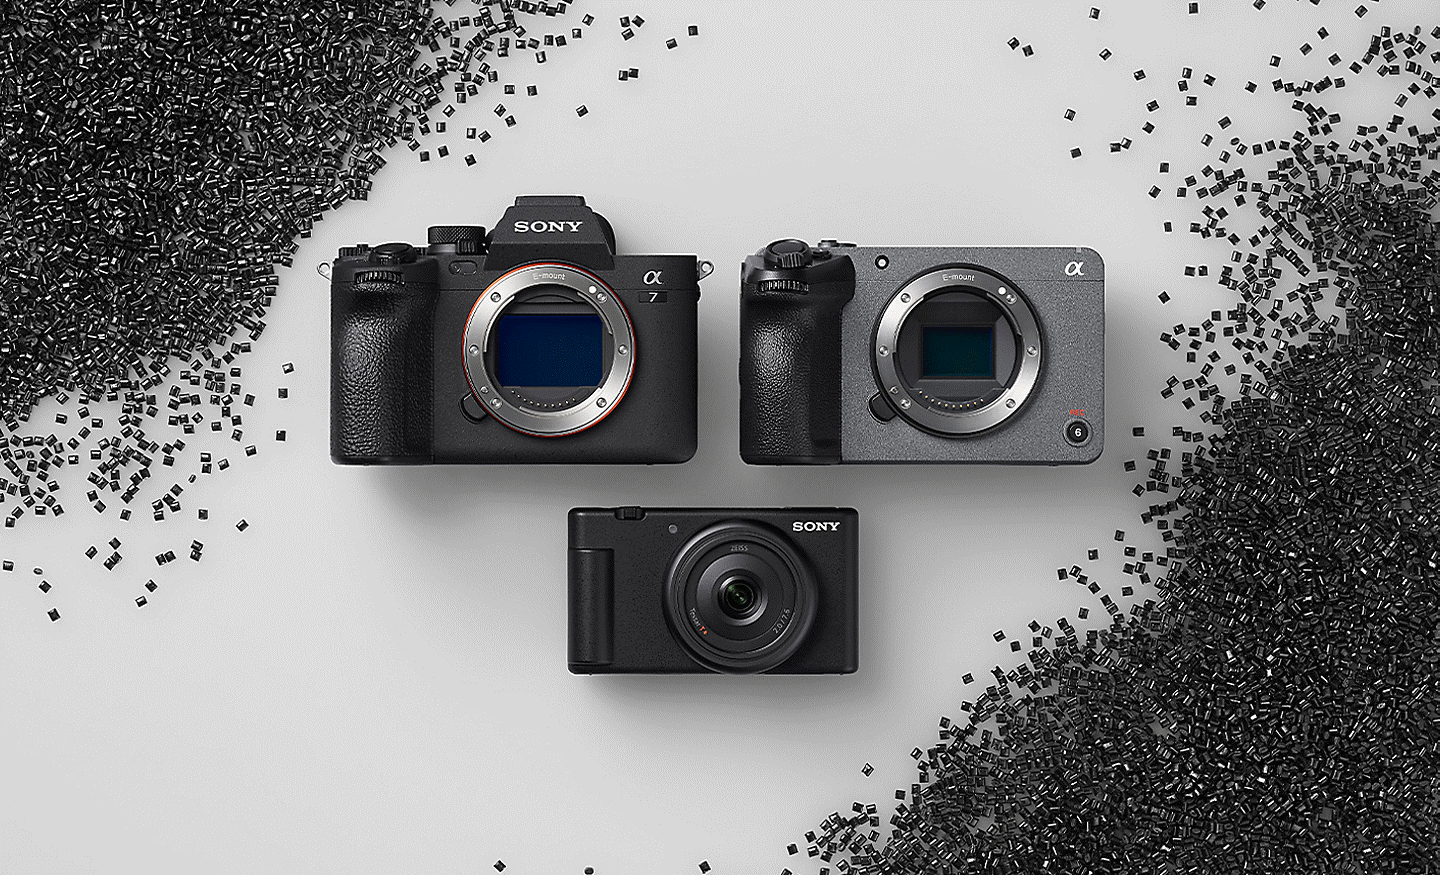 Image of Sony cameras with SORPLAS